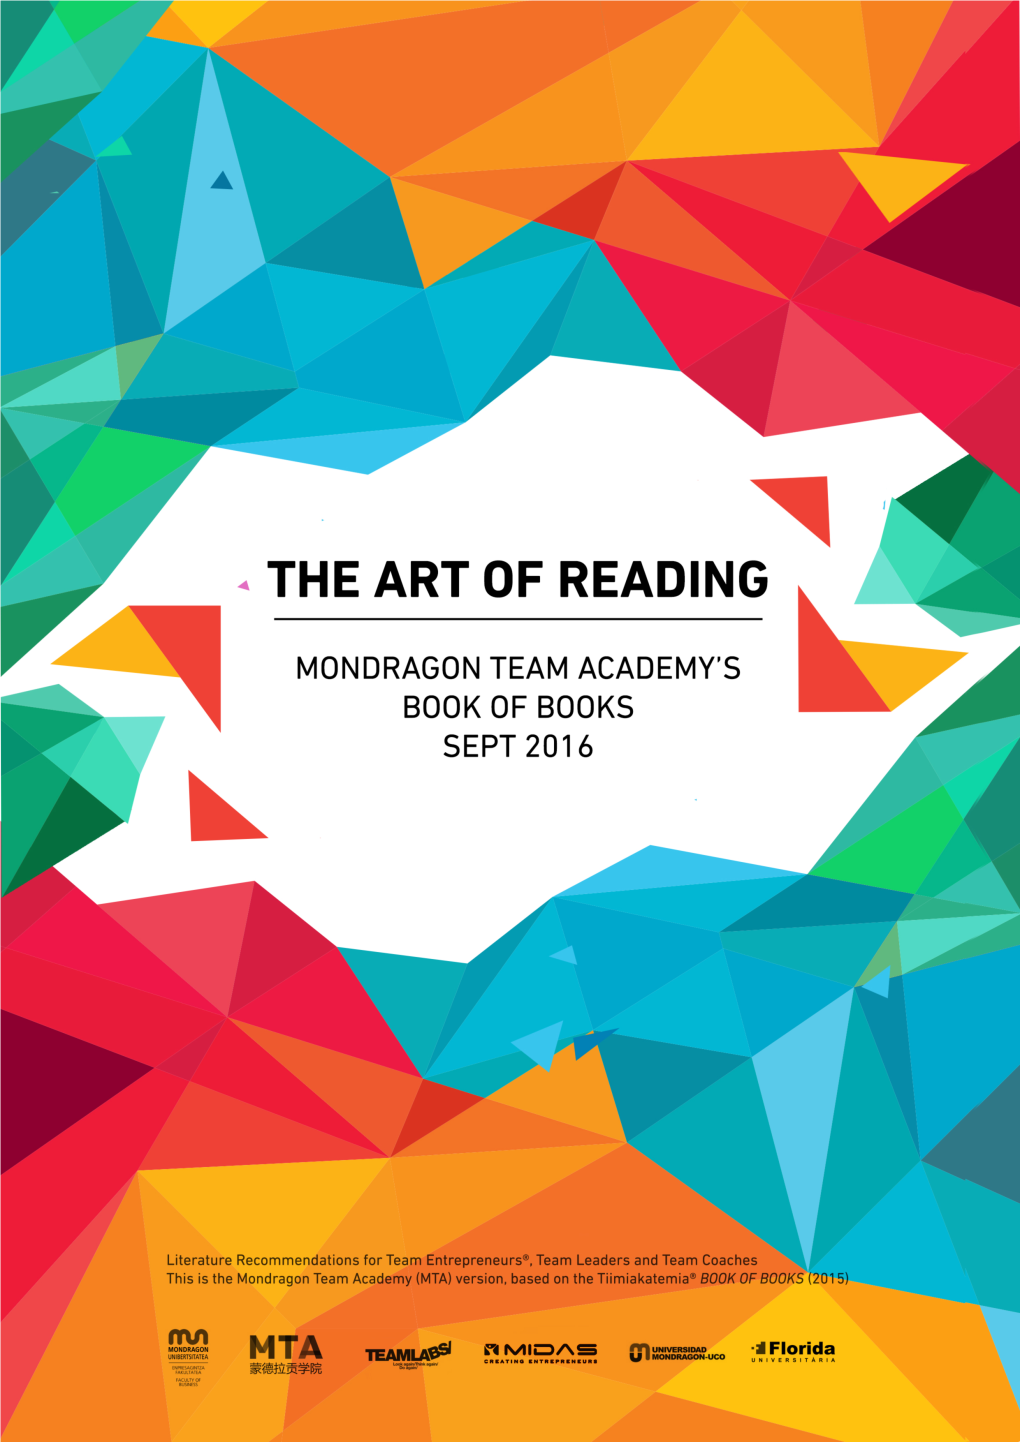 MTA--Art of Reading 2016-17.Pdf